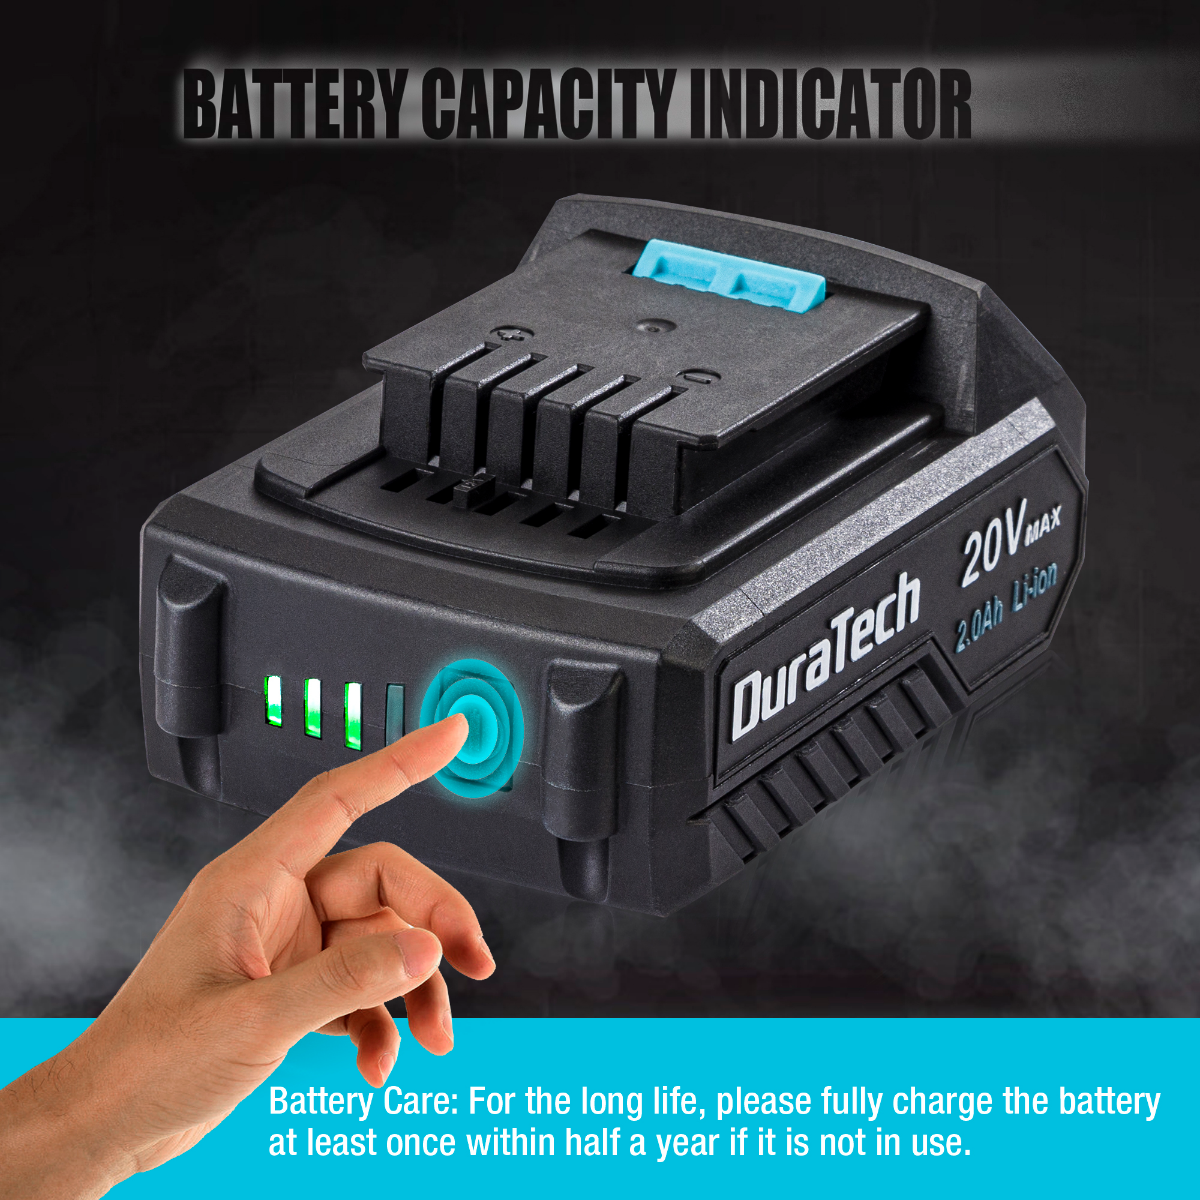 DURATECH 20V 2.0Ah Li-ion Battery Pack